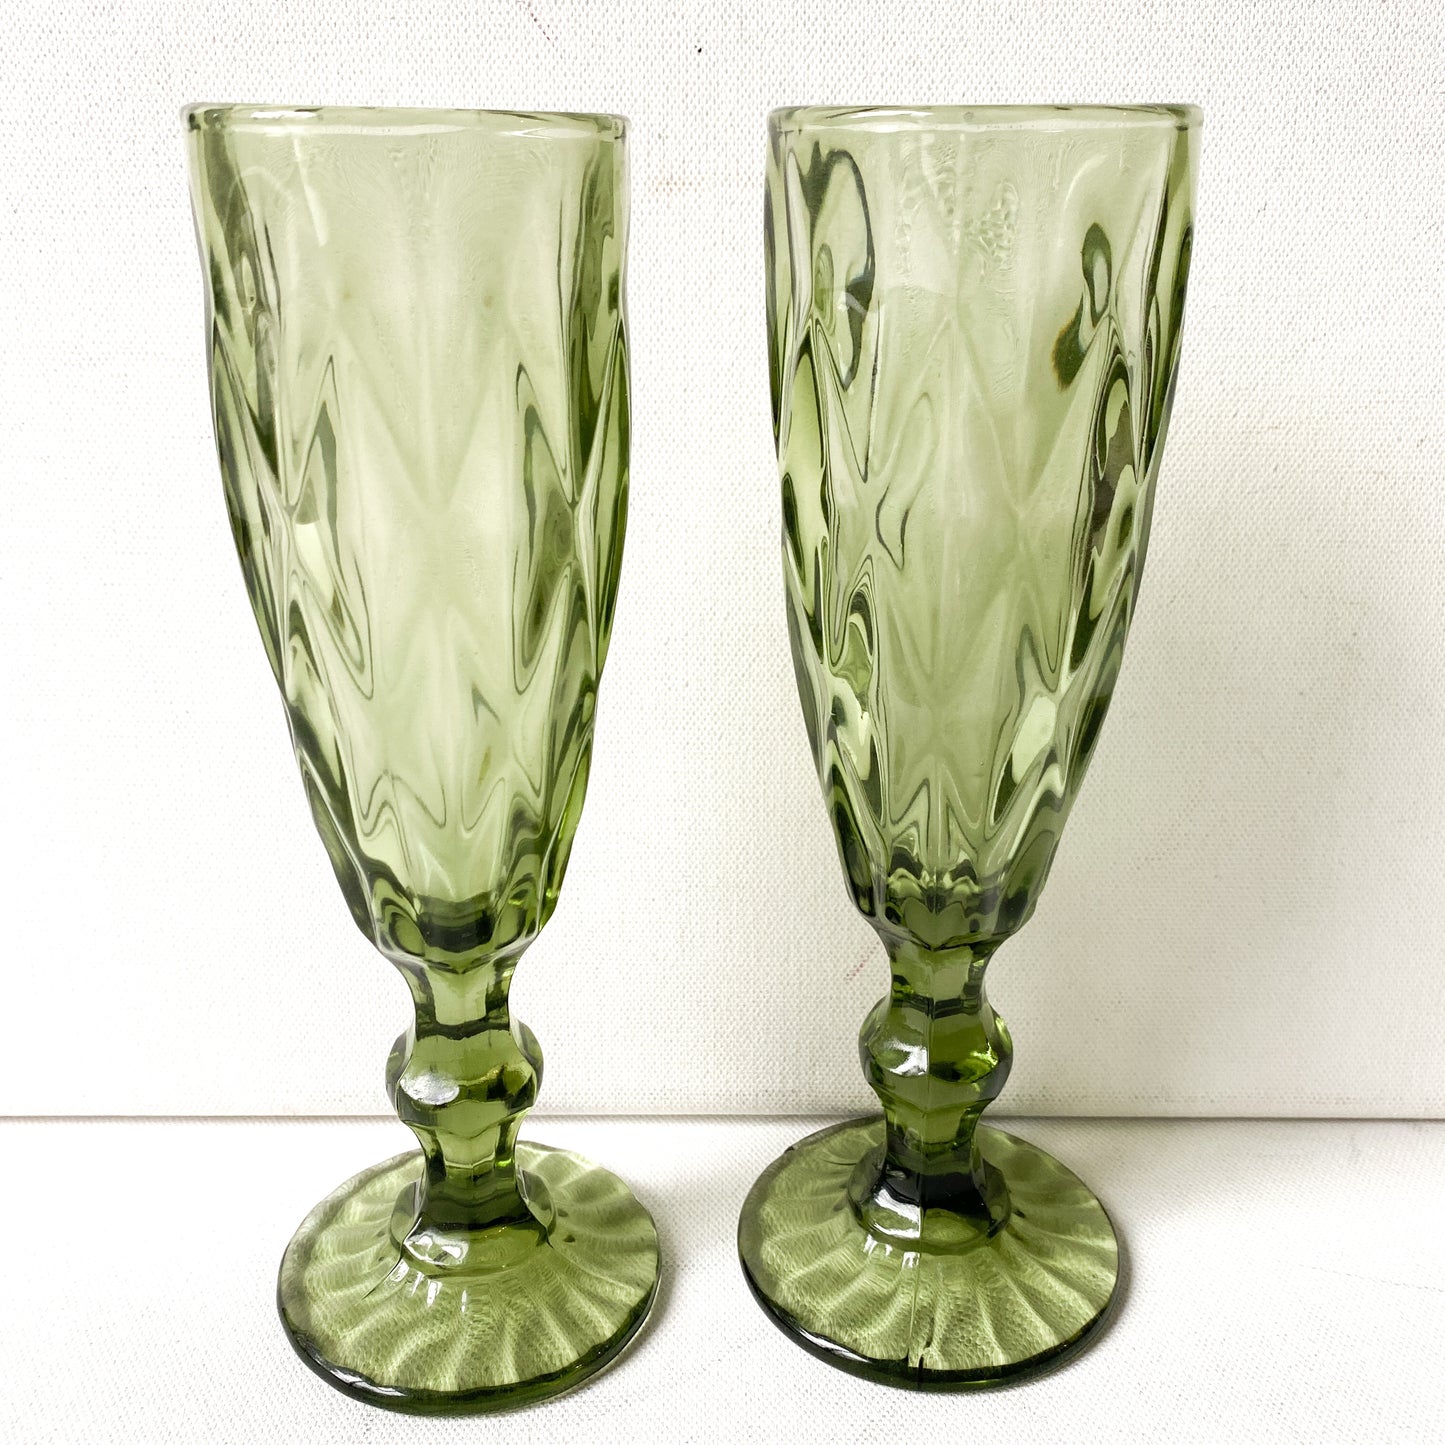 Vintage Jewel Tone Glass Set, Mix and Match Glasses,Champagne Flutes,  Goblets, Colorful Tablescape, Party Decor,